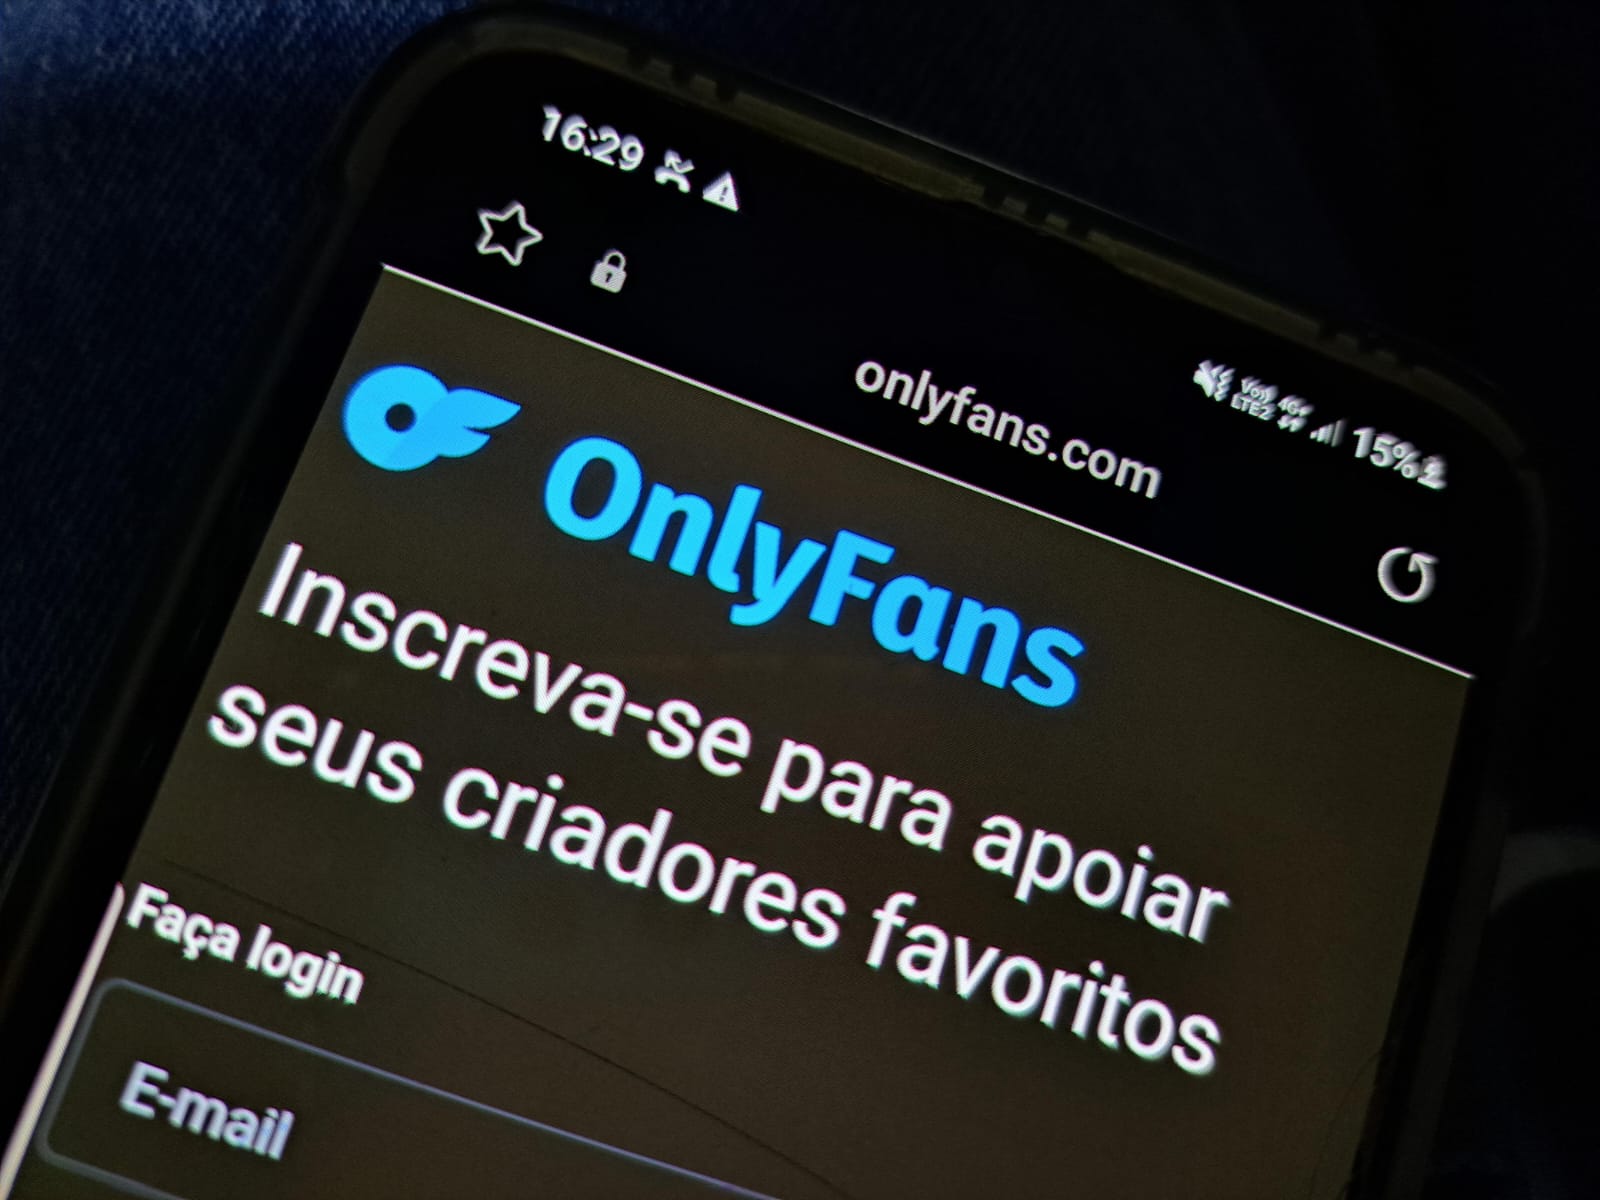 onlyfans-lucro-milionario-plataforma-foto-barbara-fernandes-gnc-1